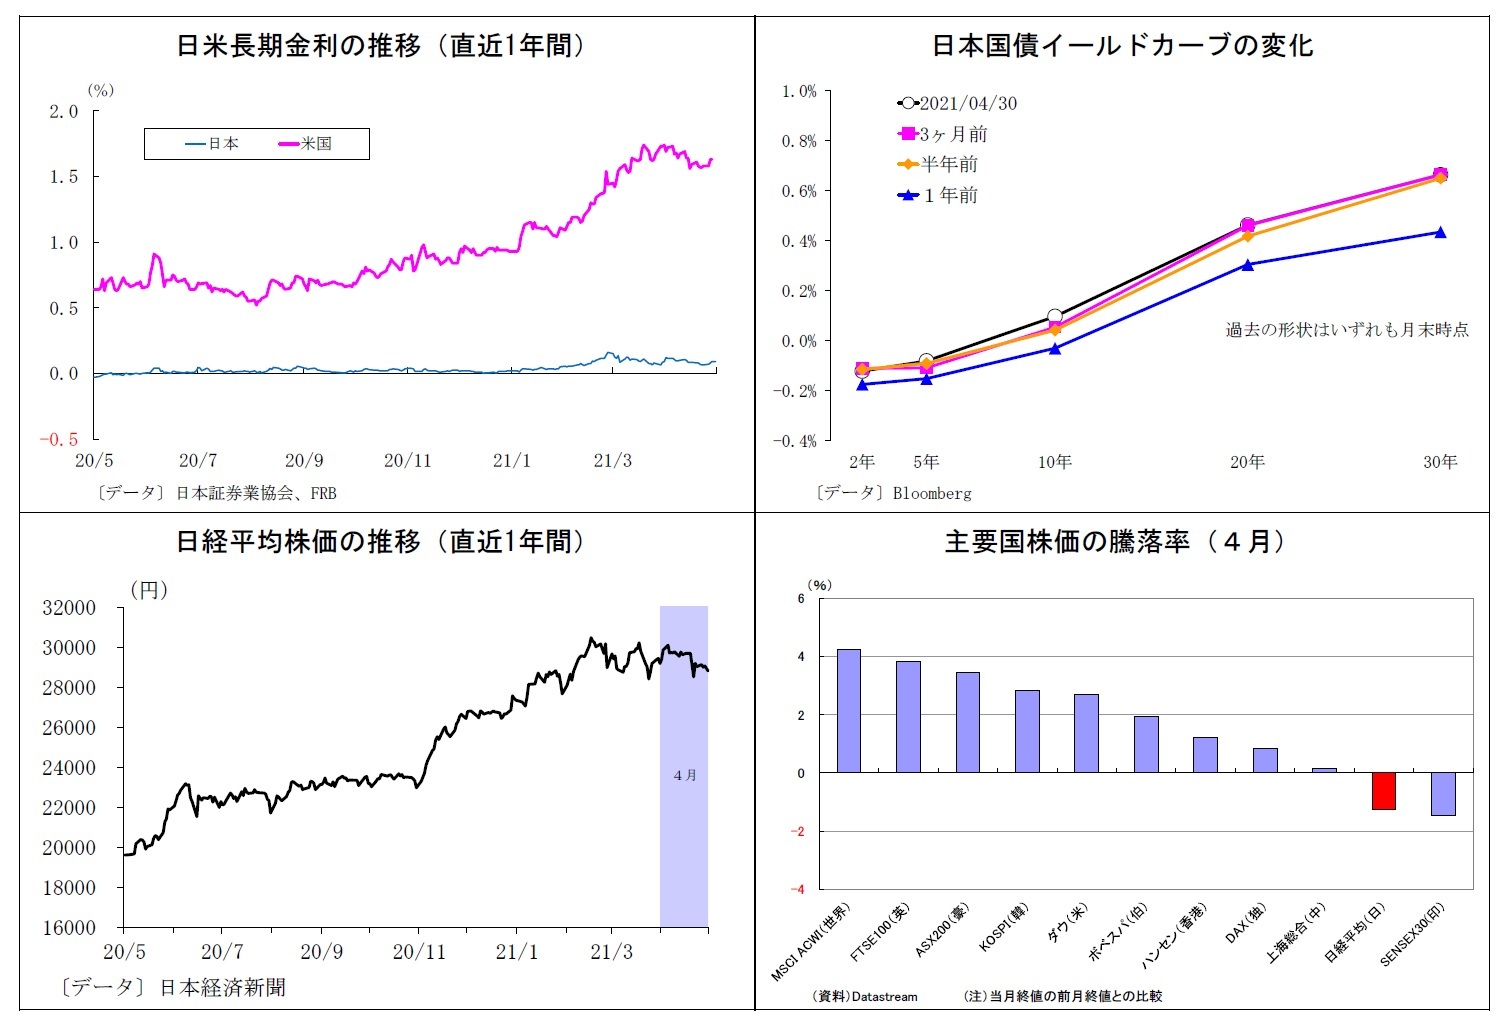 日米長期金利の推移（直近1年間）/日本国債イールドカーブの変化/日経平均株価の推移（直近1年間）/主要国株価の騰落率（４月）